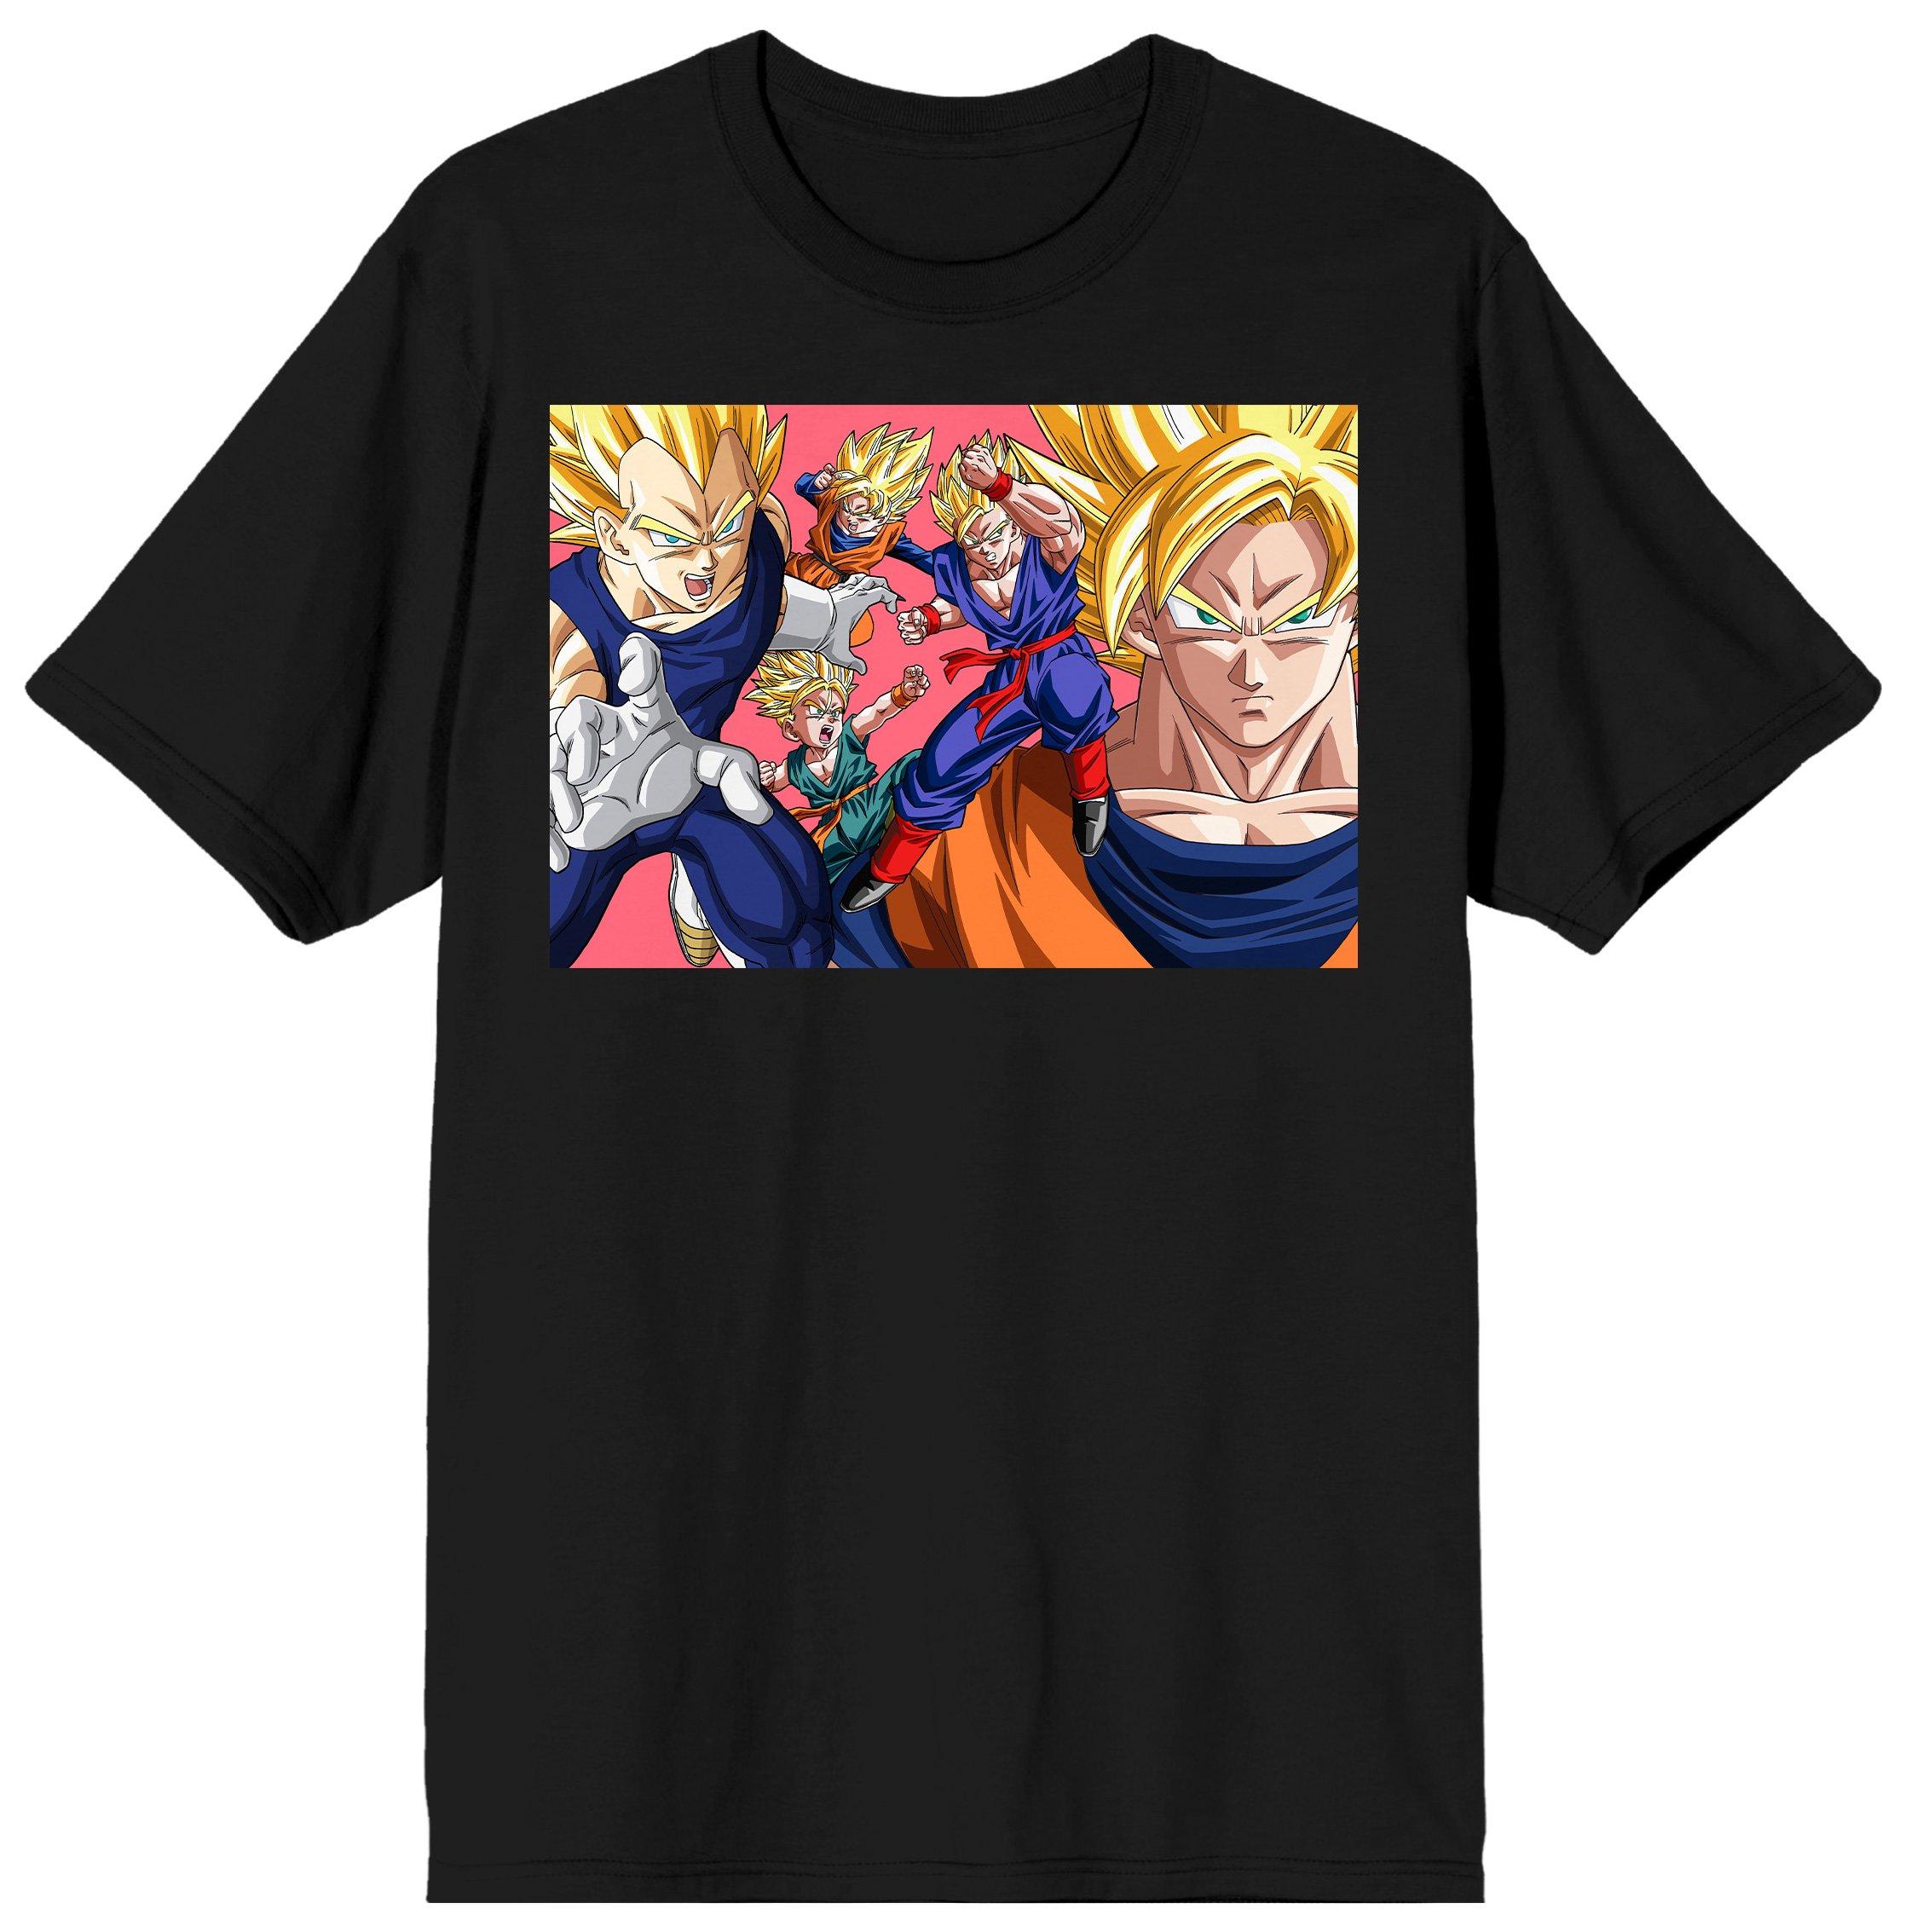 Dragon Ball Z Character Group Classic Men's Black Short Sleeve Graphic T-Shirt